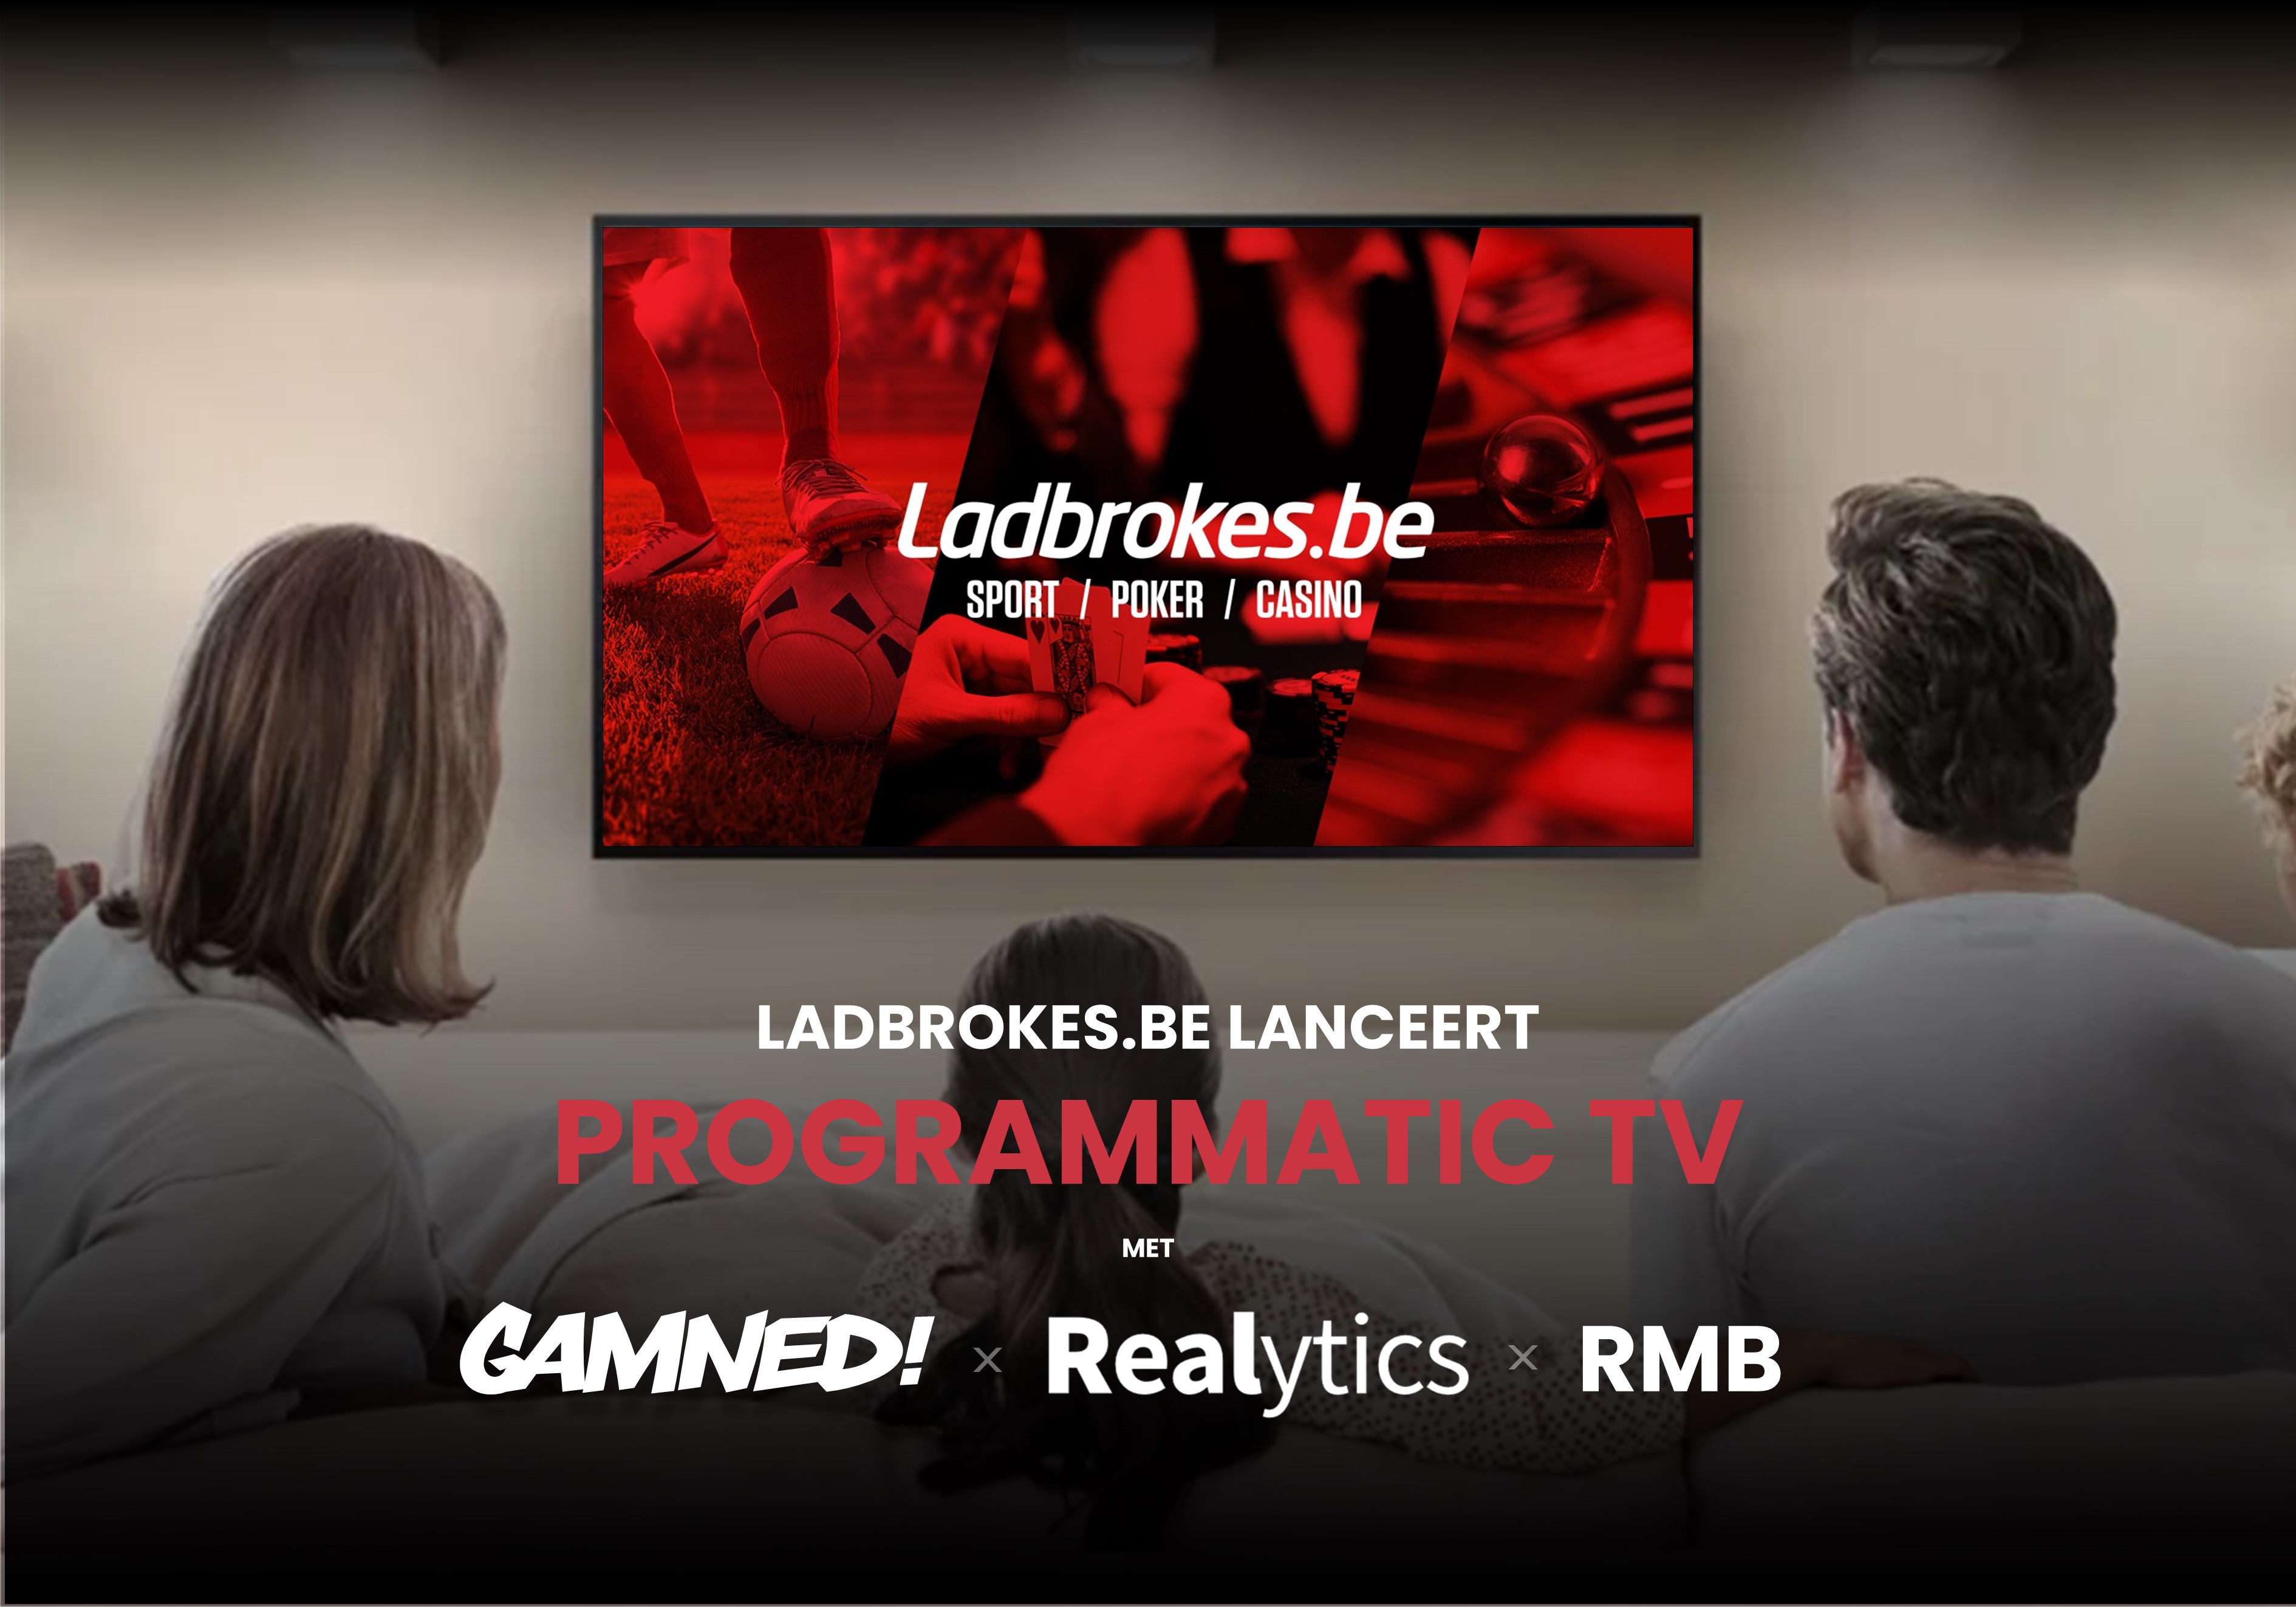 Ladbrokes.be lanceert Programmatic TV